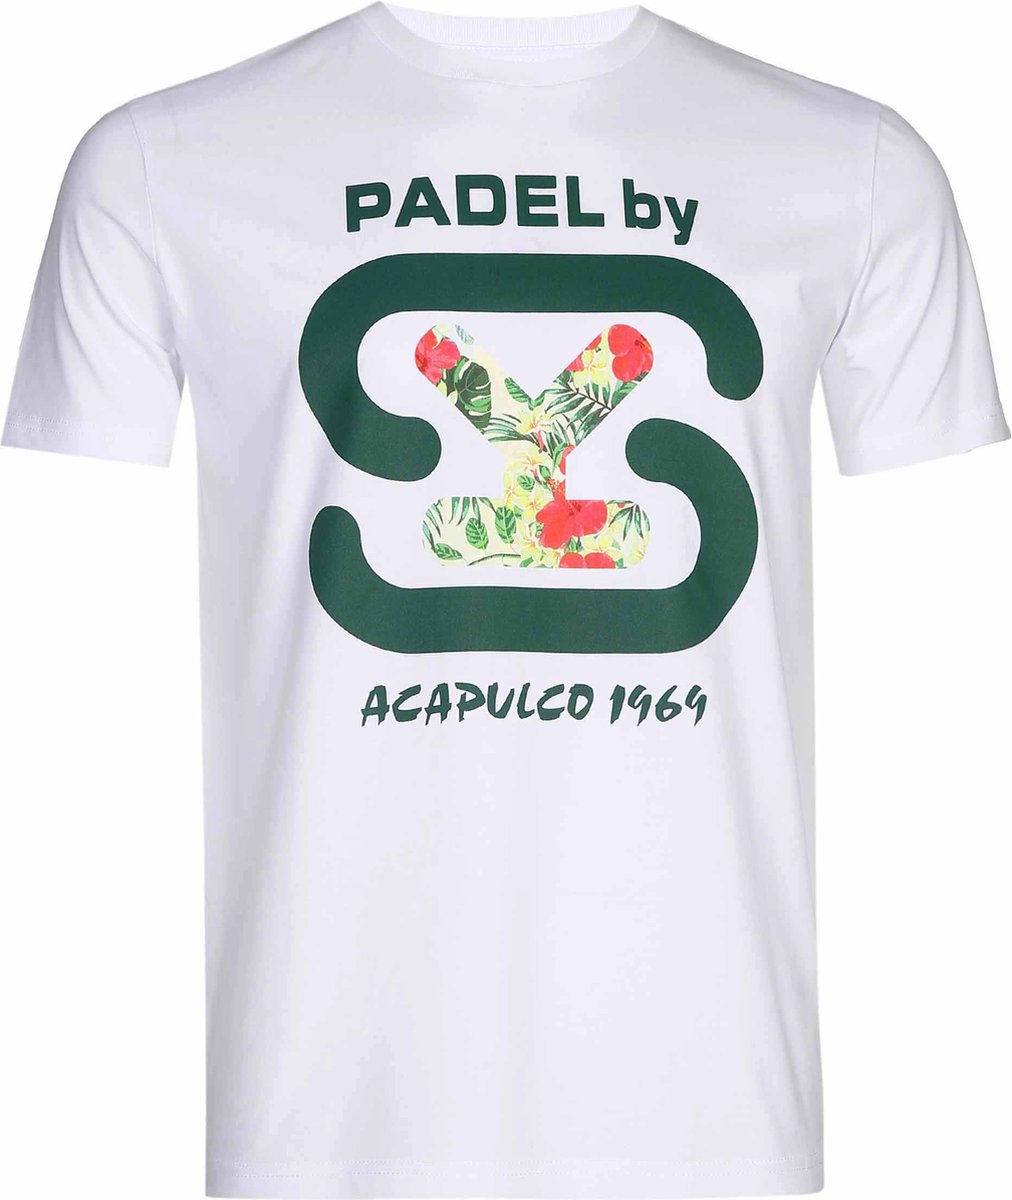 PADELbySY - ACAPULCO 1969 - T-SHIRT MEN'S - WHITE - SIZE XL